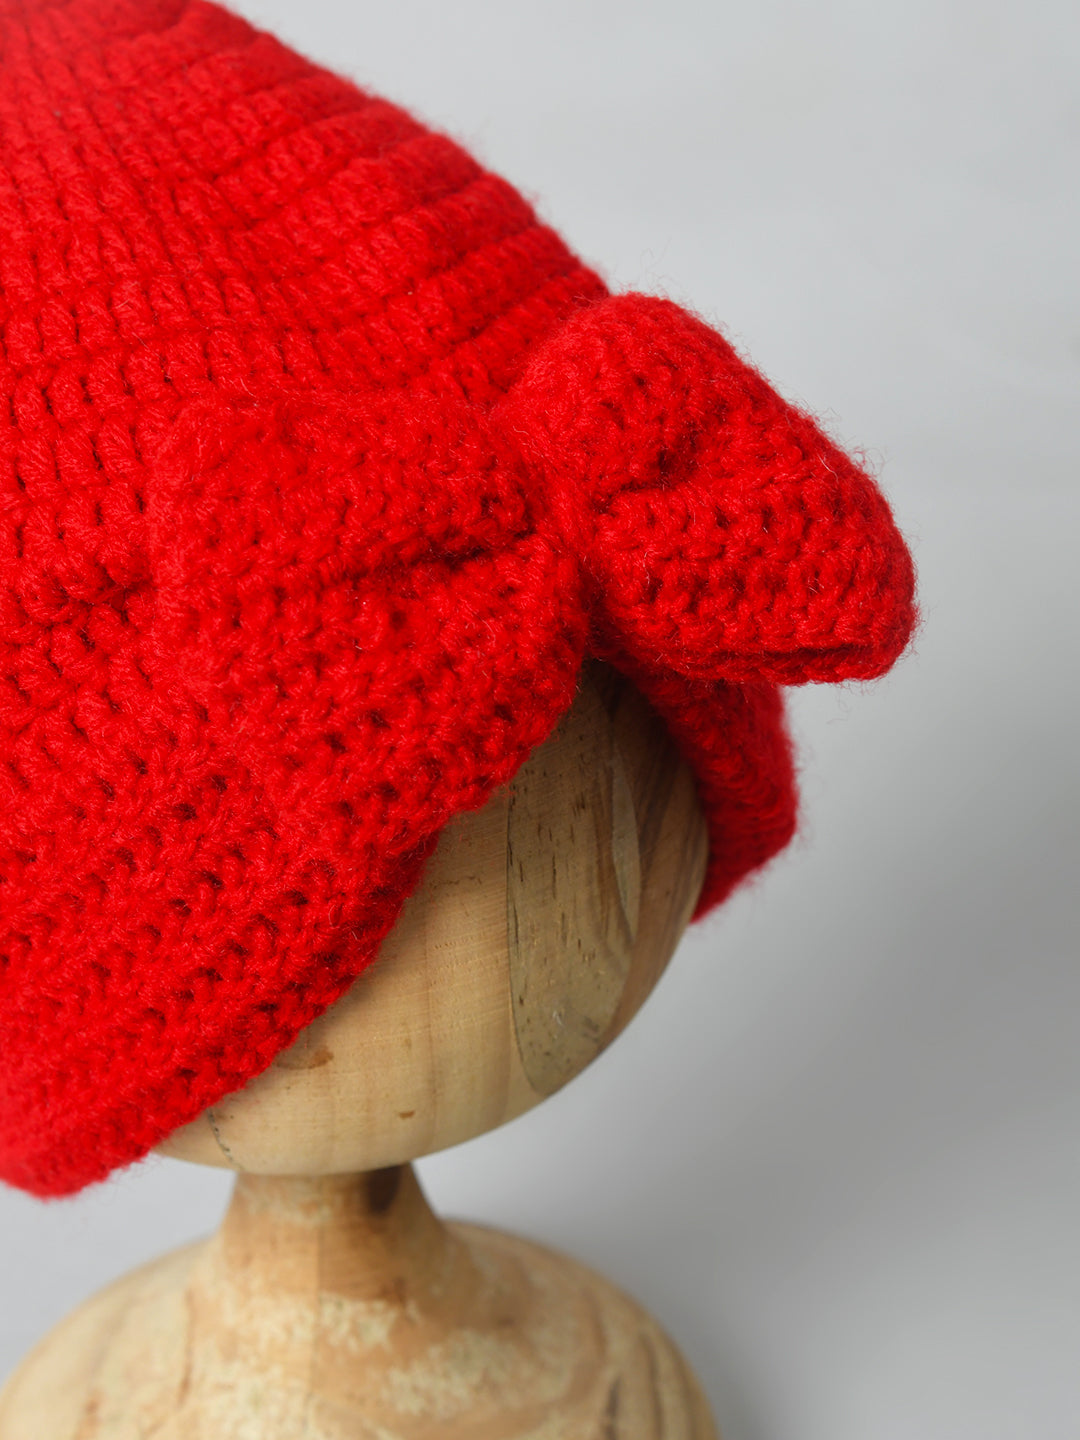 Pack of 2 Red & White Soft Woolen Beanie Winter Warm Cap for Girls